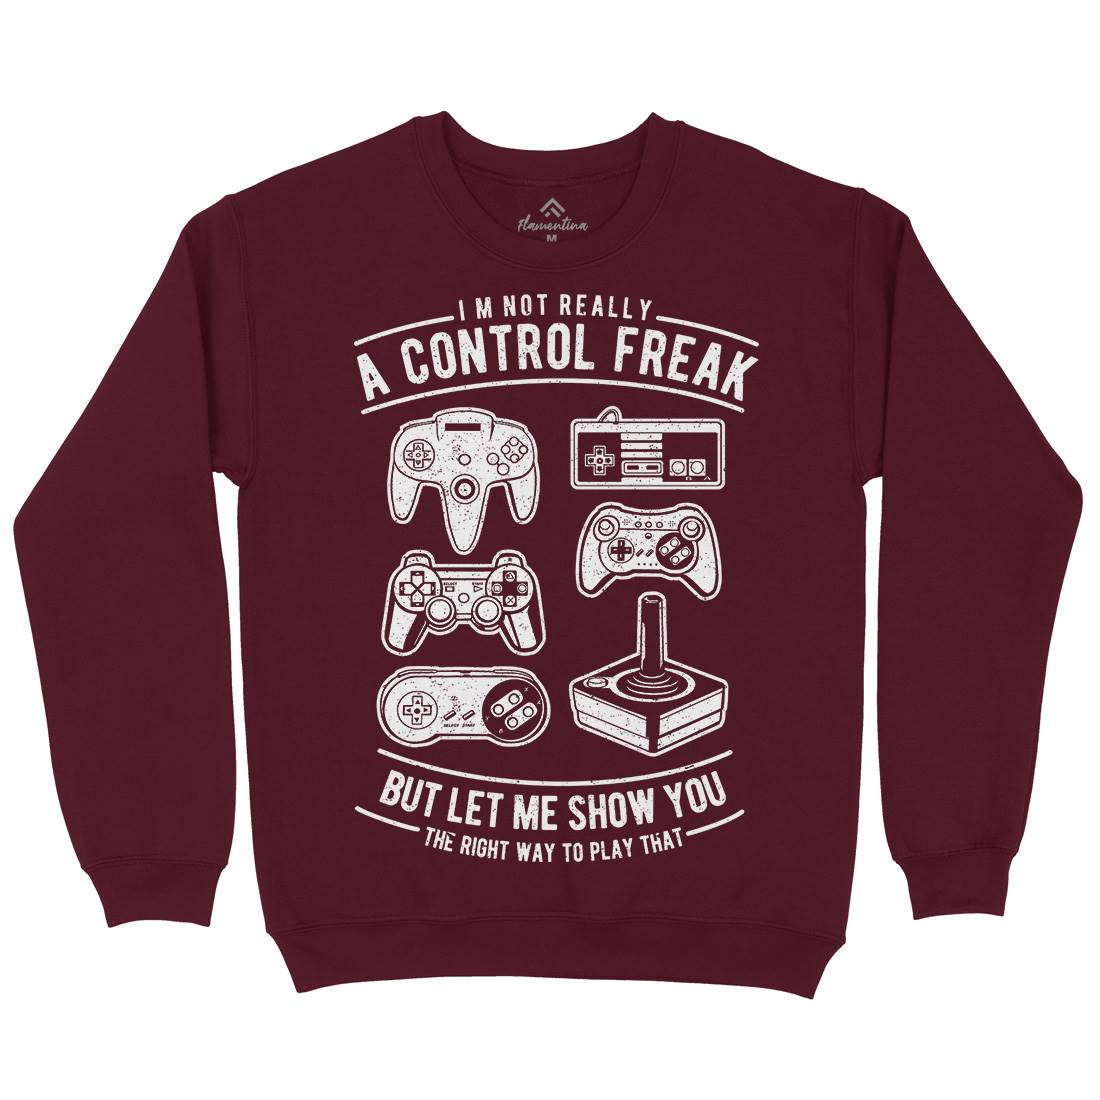 A Control Freak Kids Crew Neck Sweatshirt Geek A601